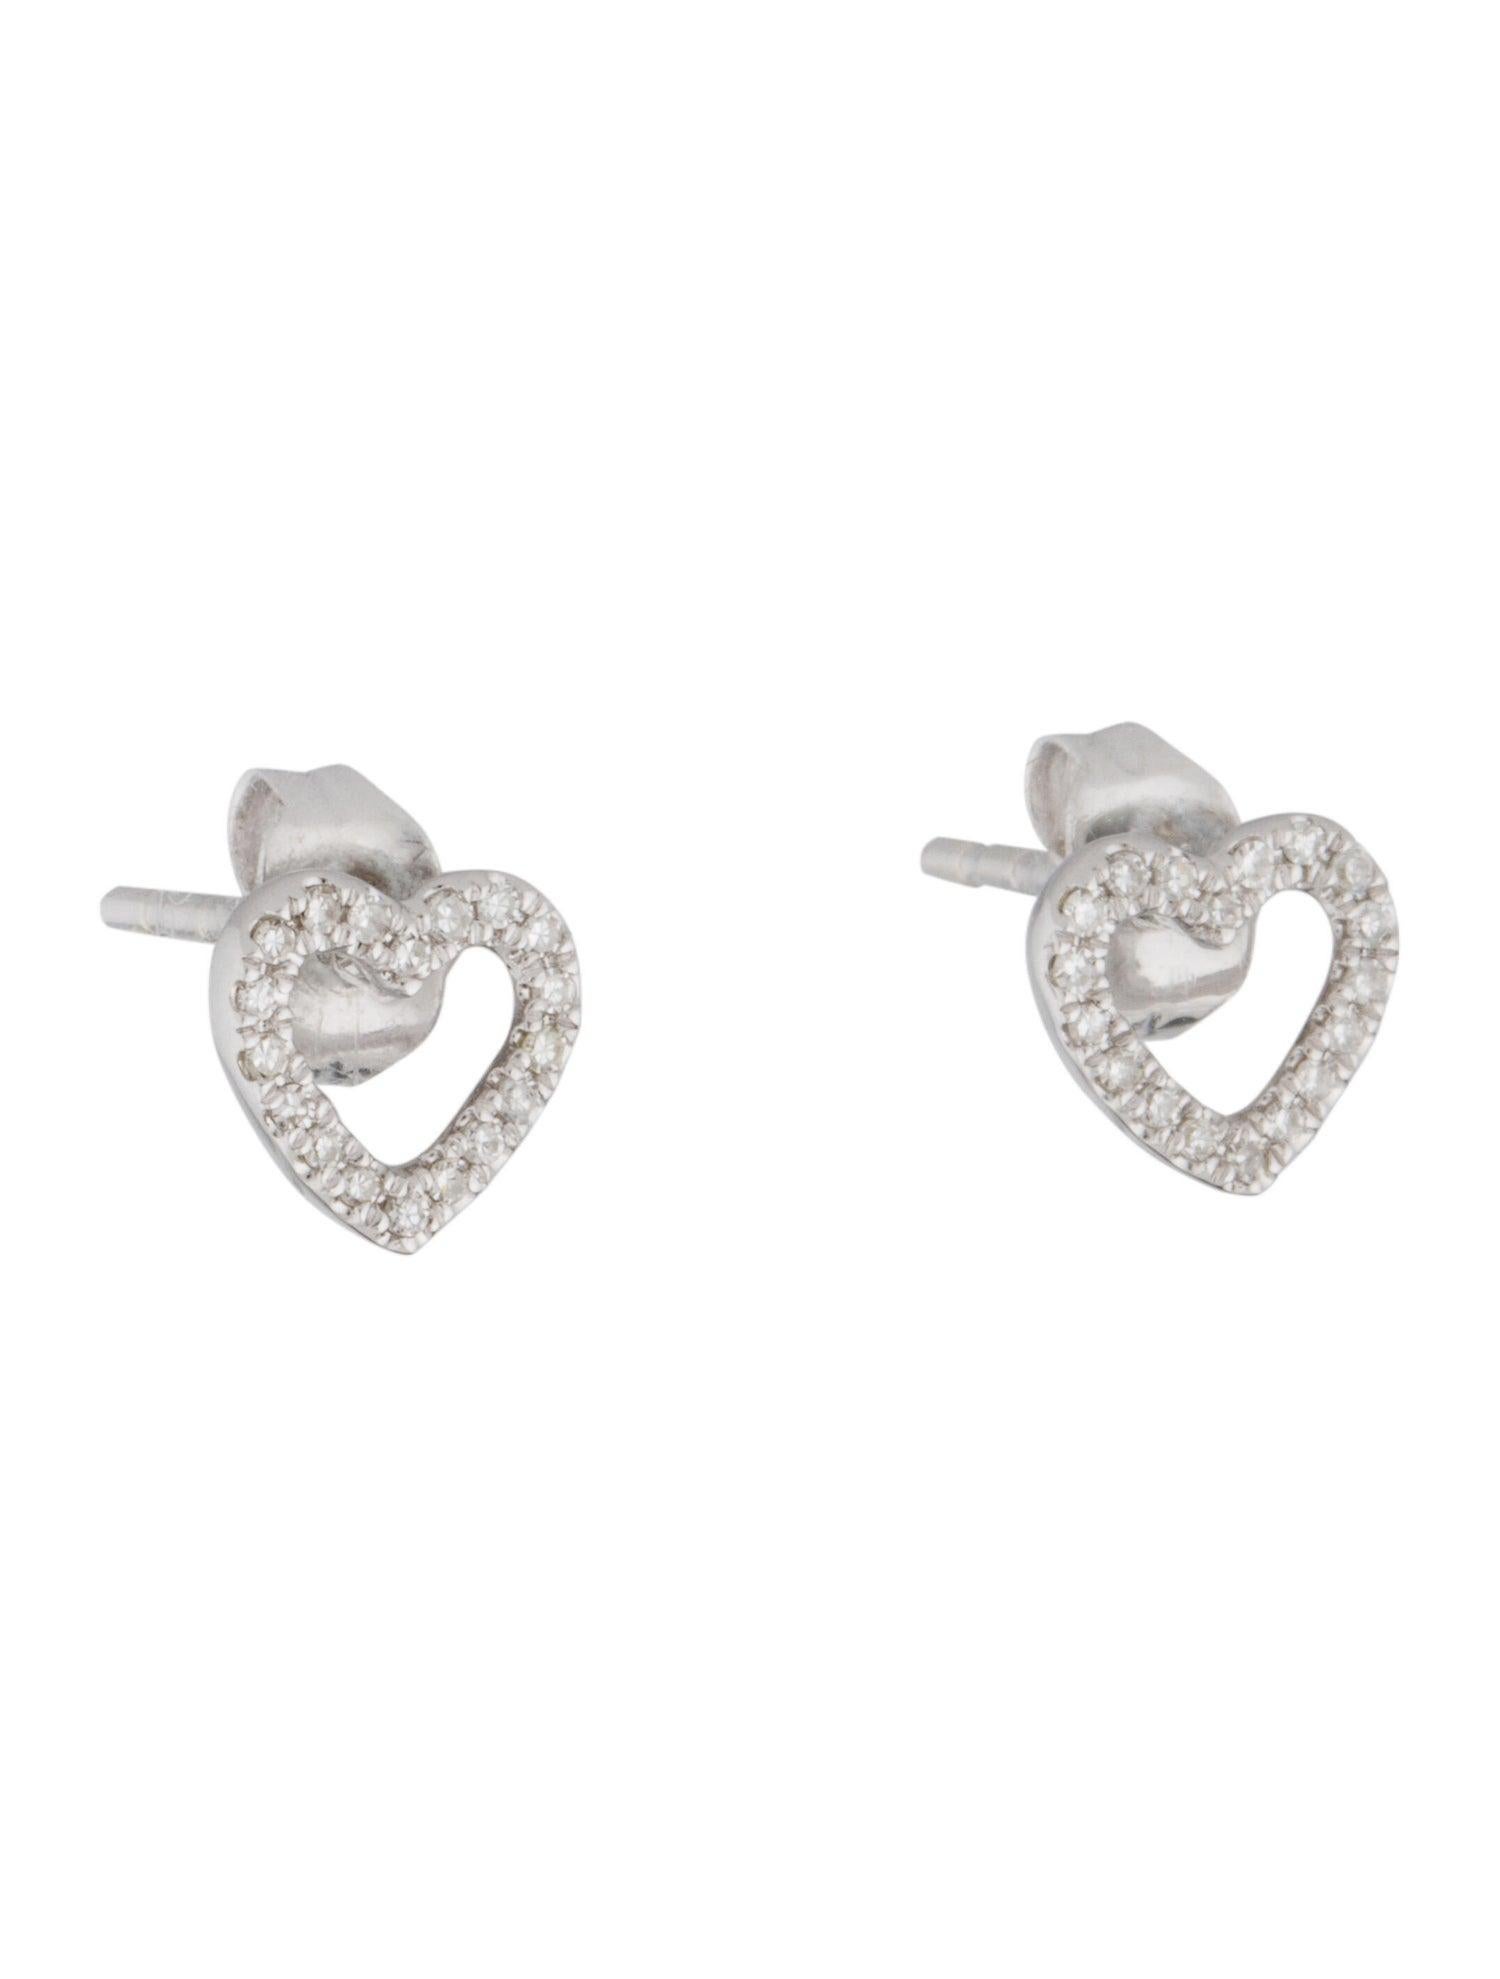 Contemporary 14 Karat White Gold 0.10 Carat Diamond Open Heart Stud Earrings For Sale